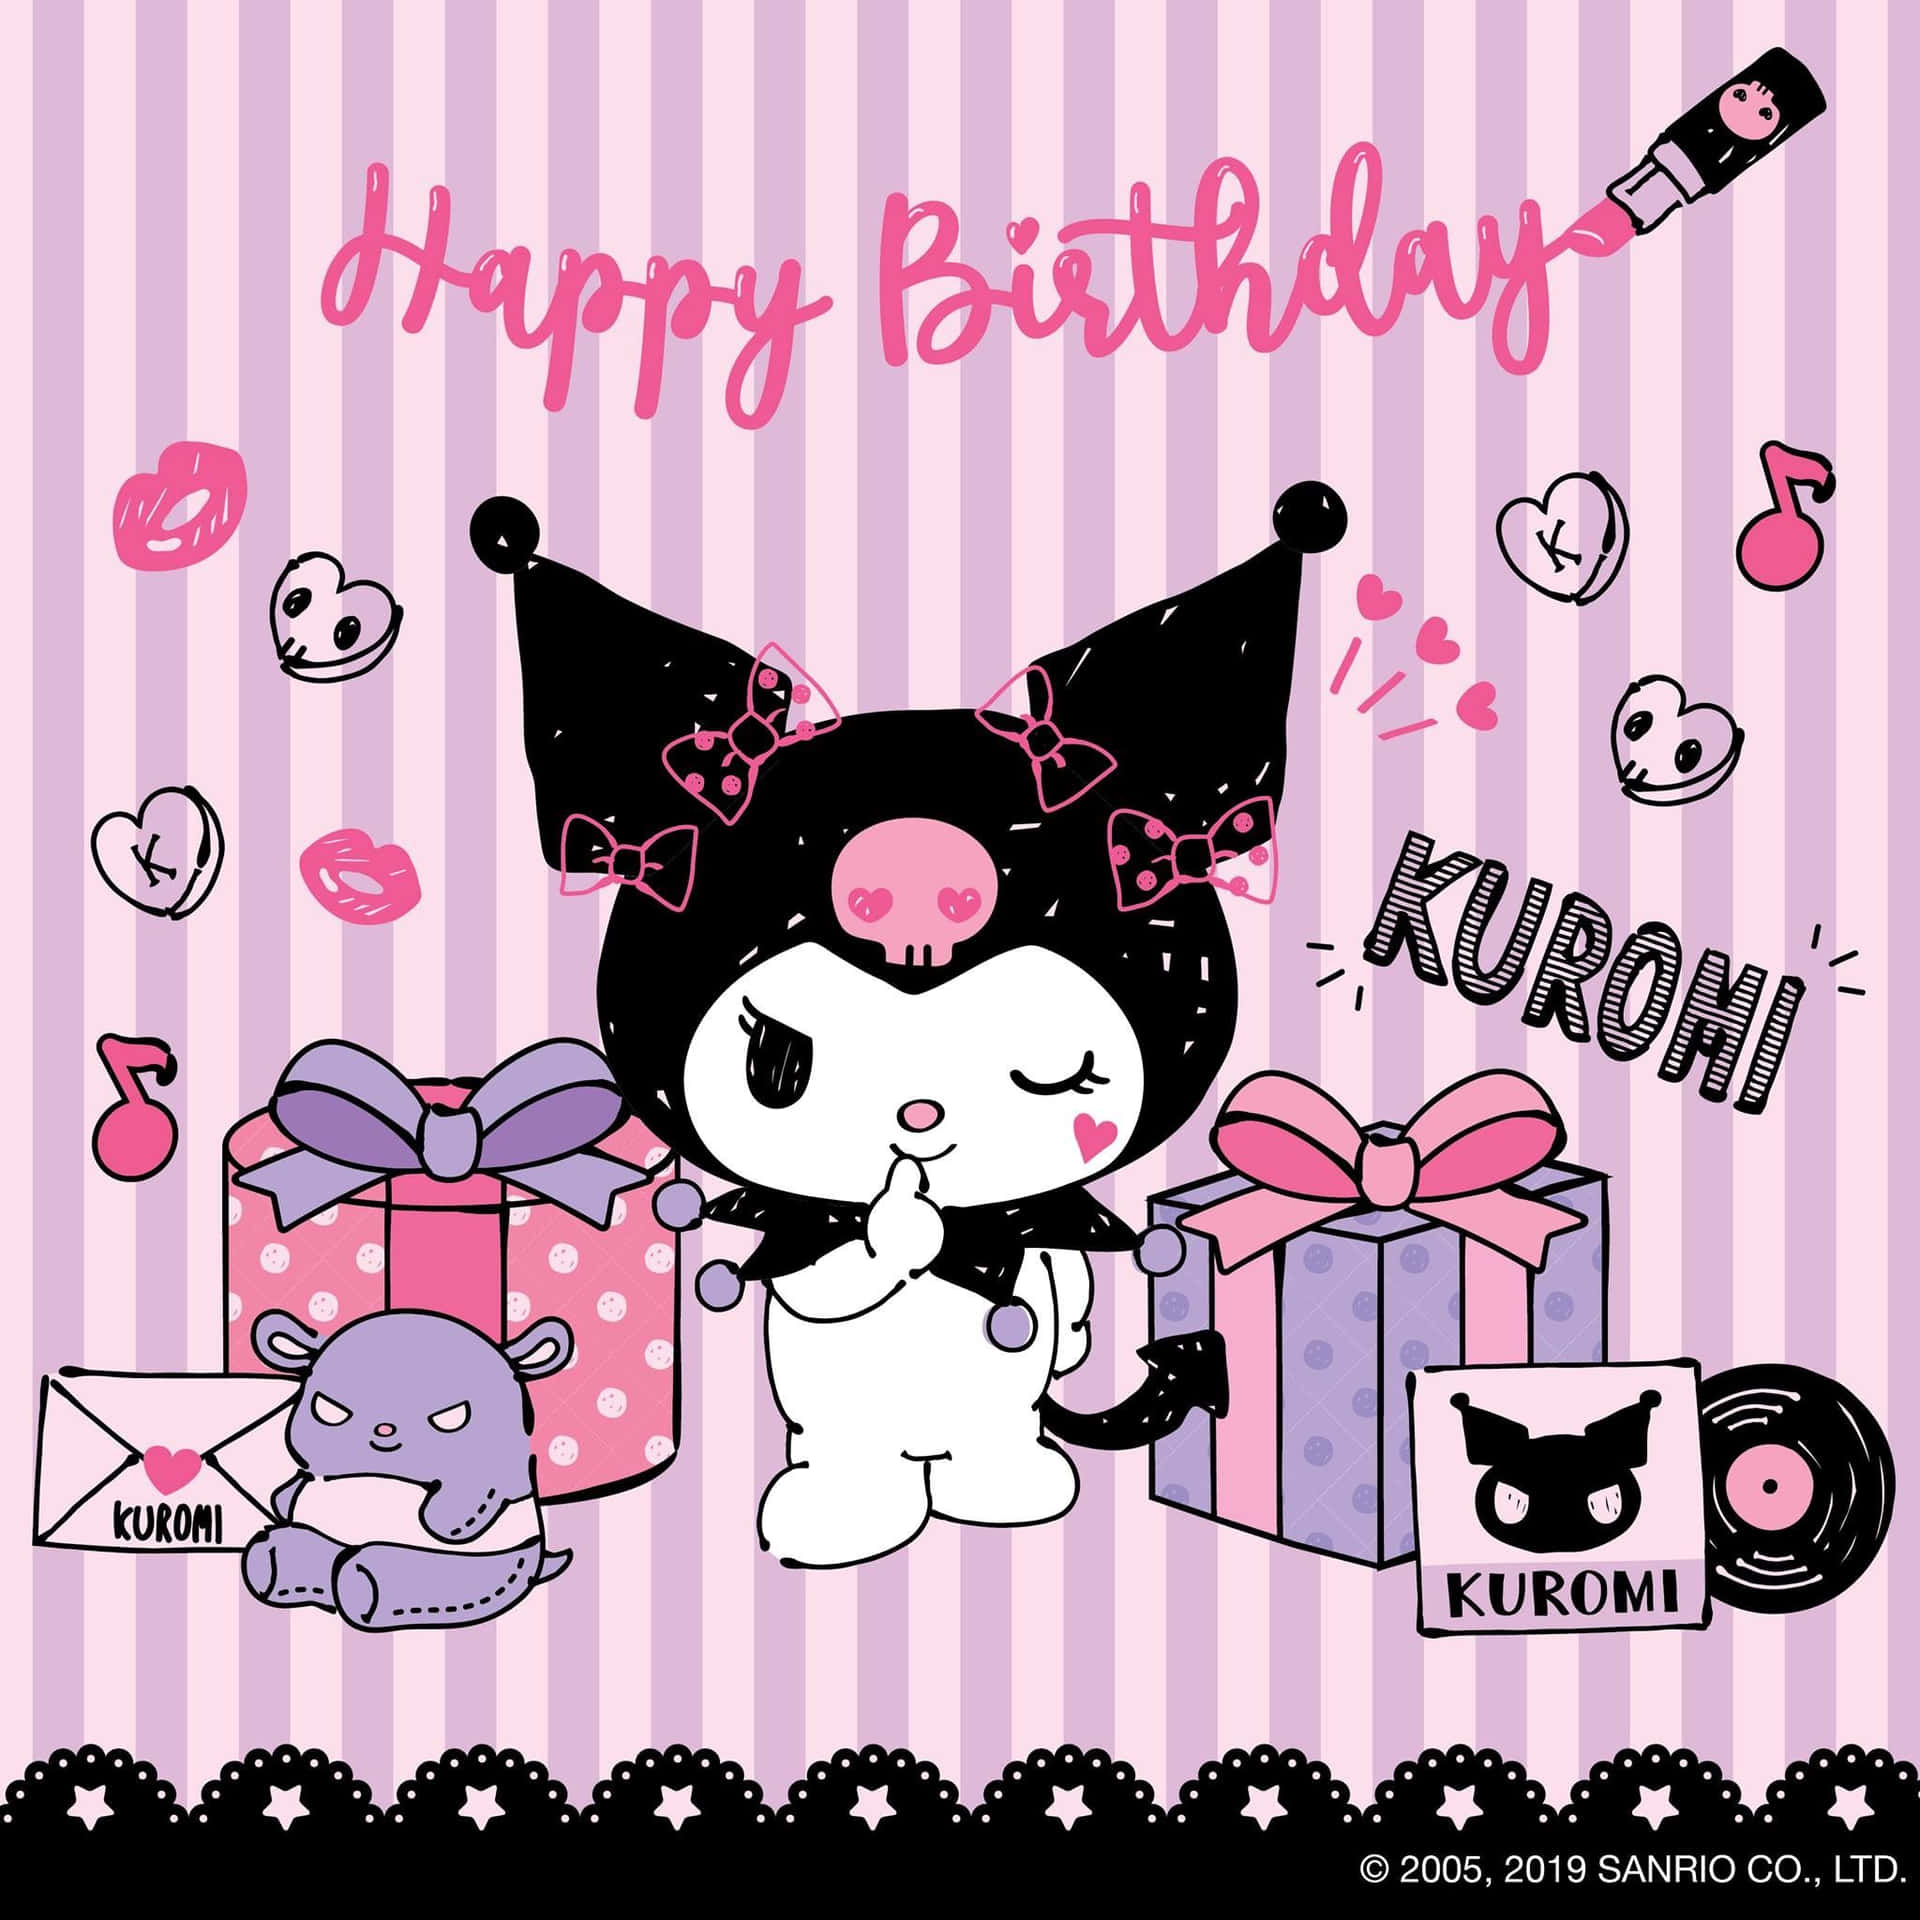 Celebrate Kuromi's Birthday with a Fun Wallpaper Wallpaper